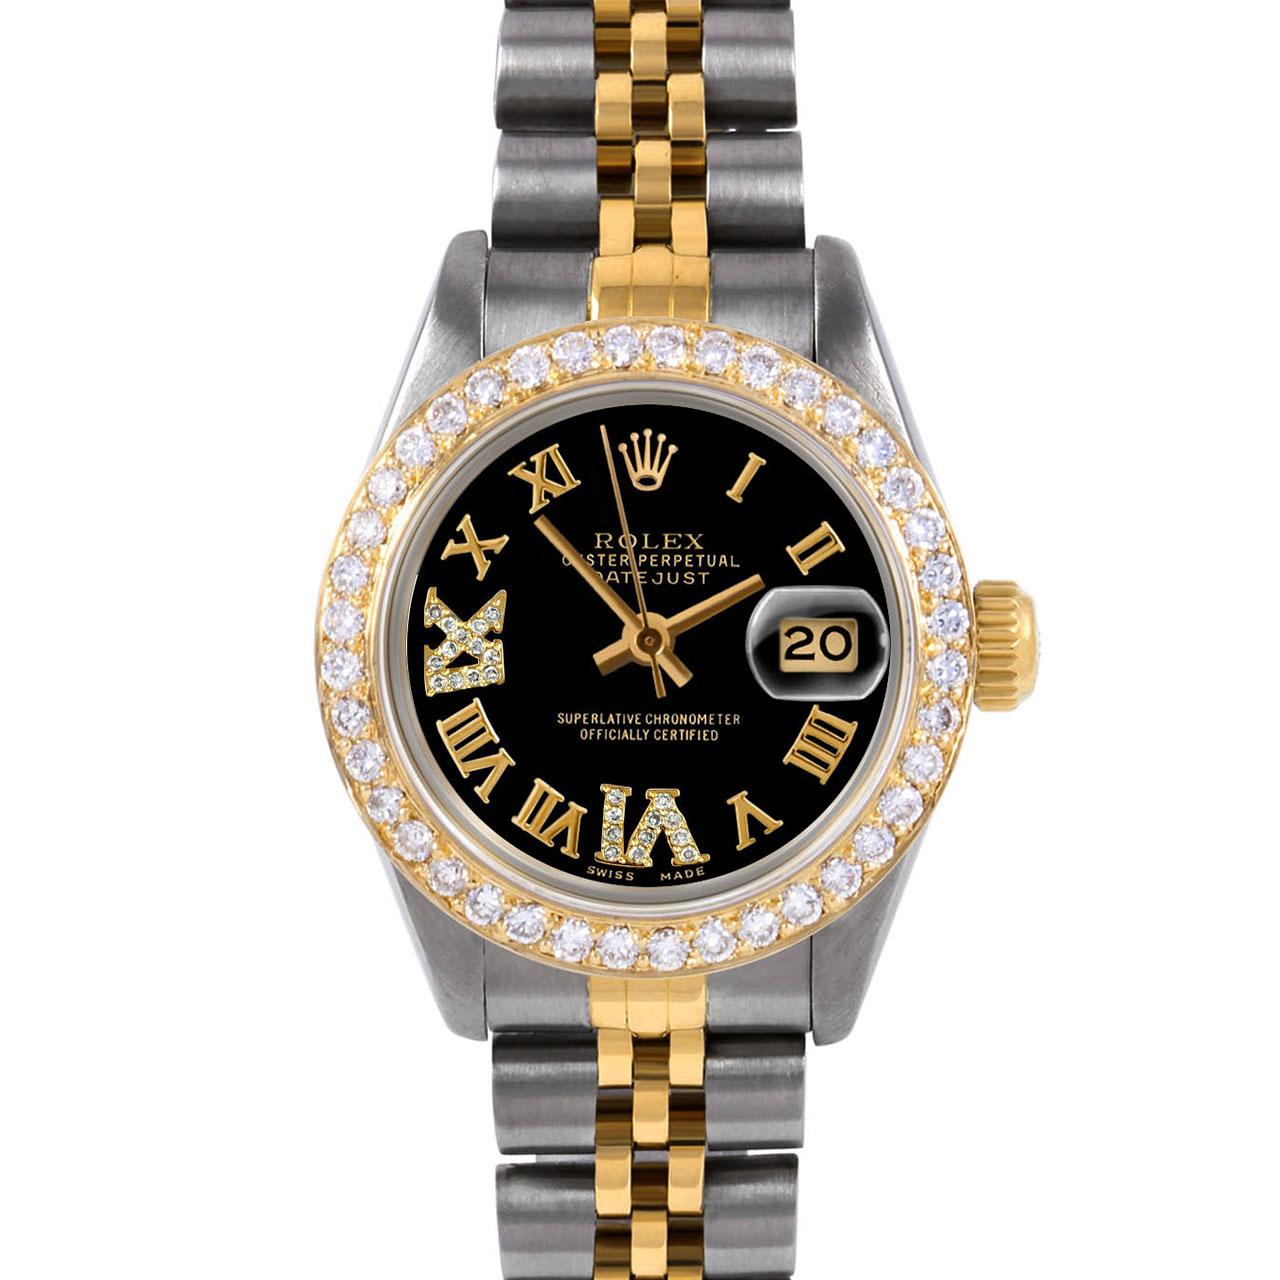 Swiss Wrist - SKU 6917-TT-BLK-8DR69-BDS-JBL

Brand : Rolex
Model : Datejust (Non-Quickset Model)
Gender : Ladies
Metals : 14K/Stainless Steel
Case Size : 26 mm

Dial : Custom Black Roman Diamond Dial (This dial is not original Rolex And has been